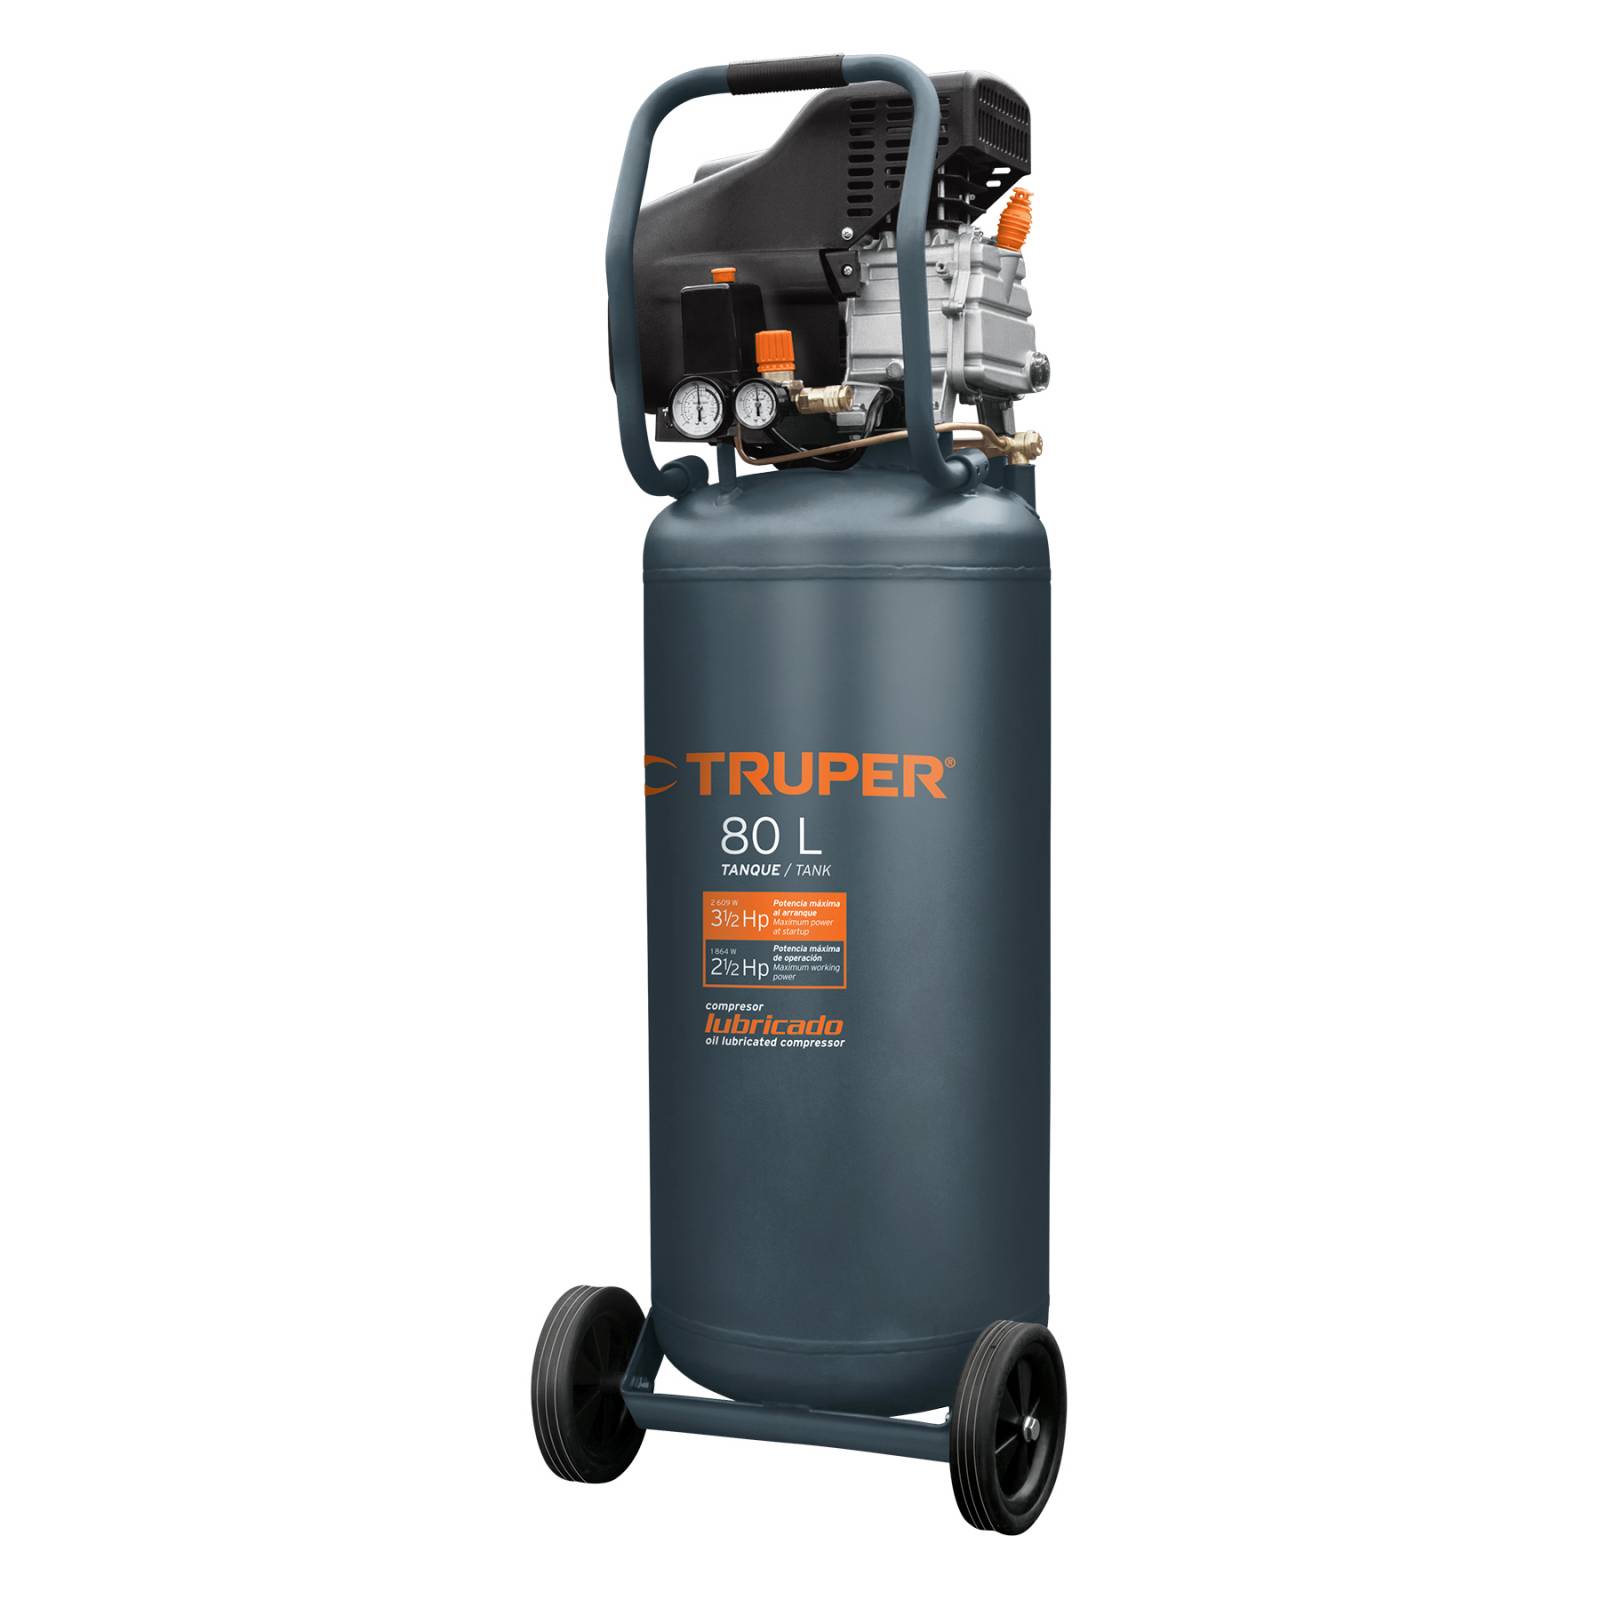 Compresor vertical lubricado de 80 litros Truper 15656